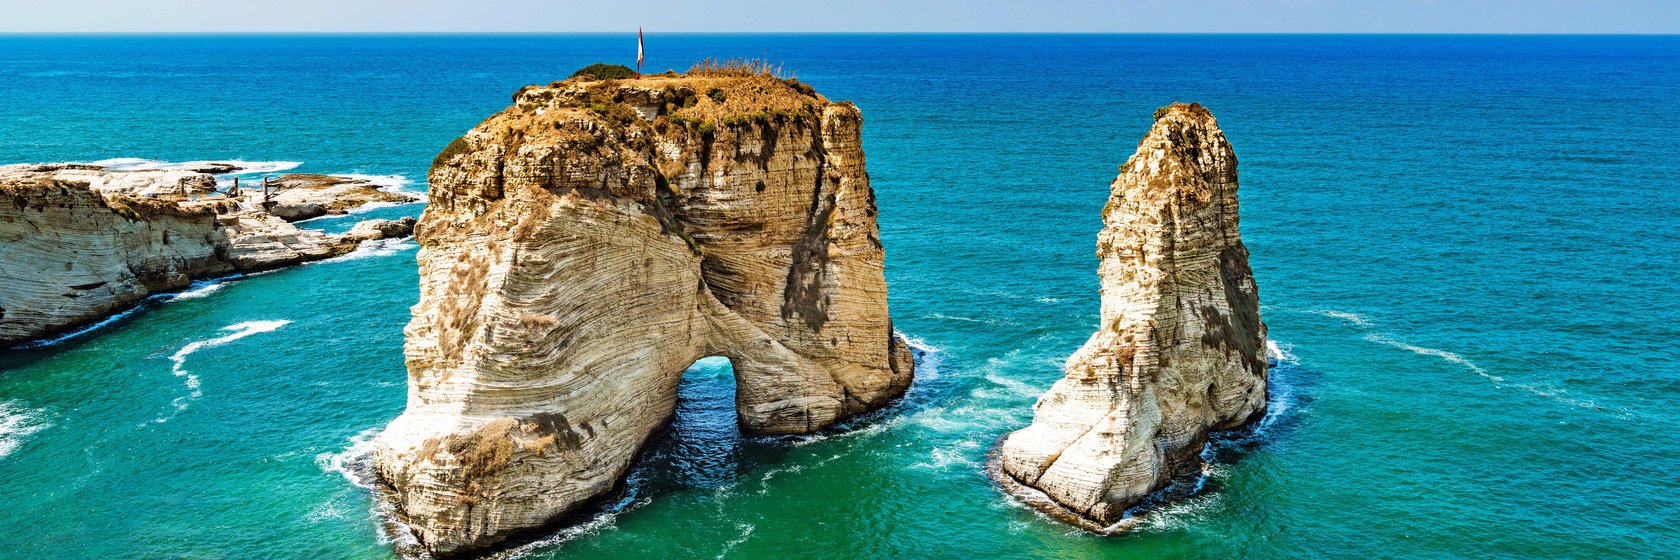 Příroda v Libanonu